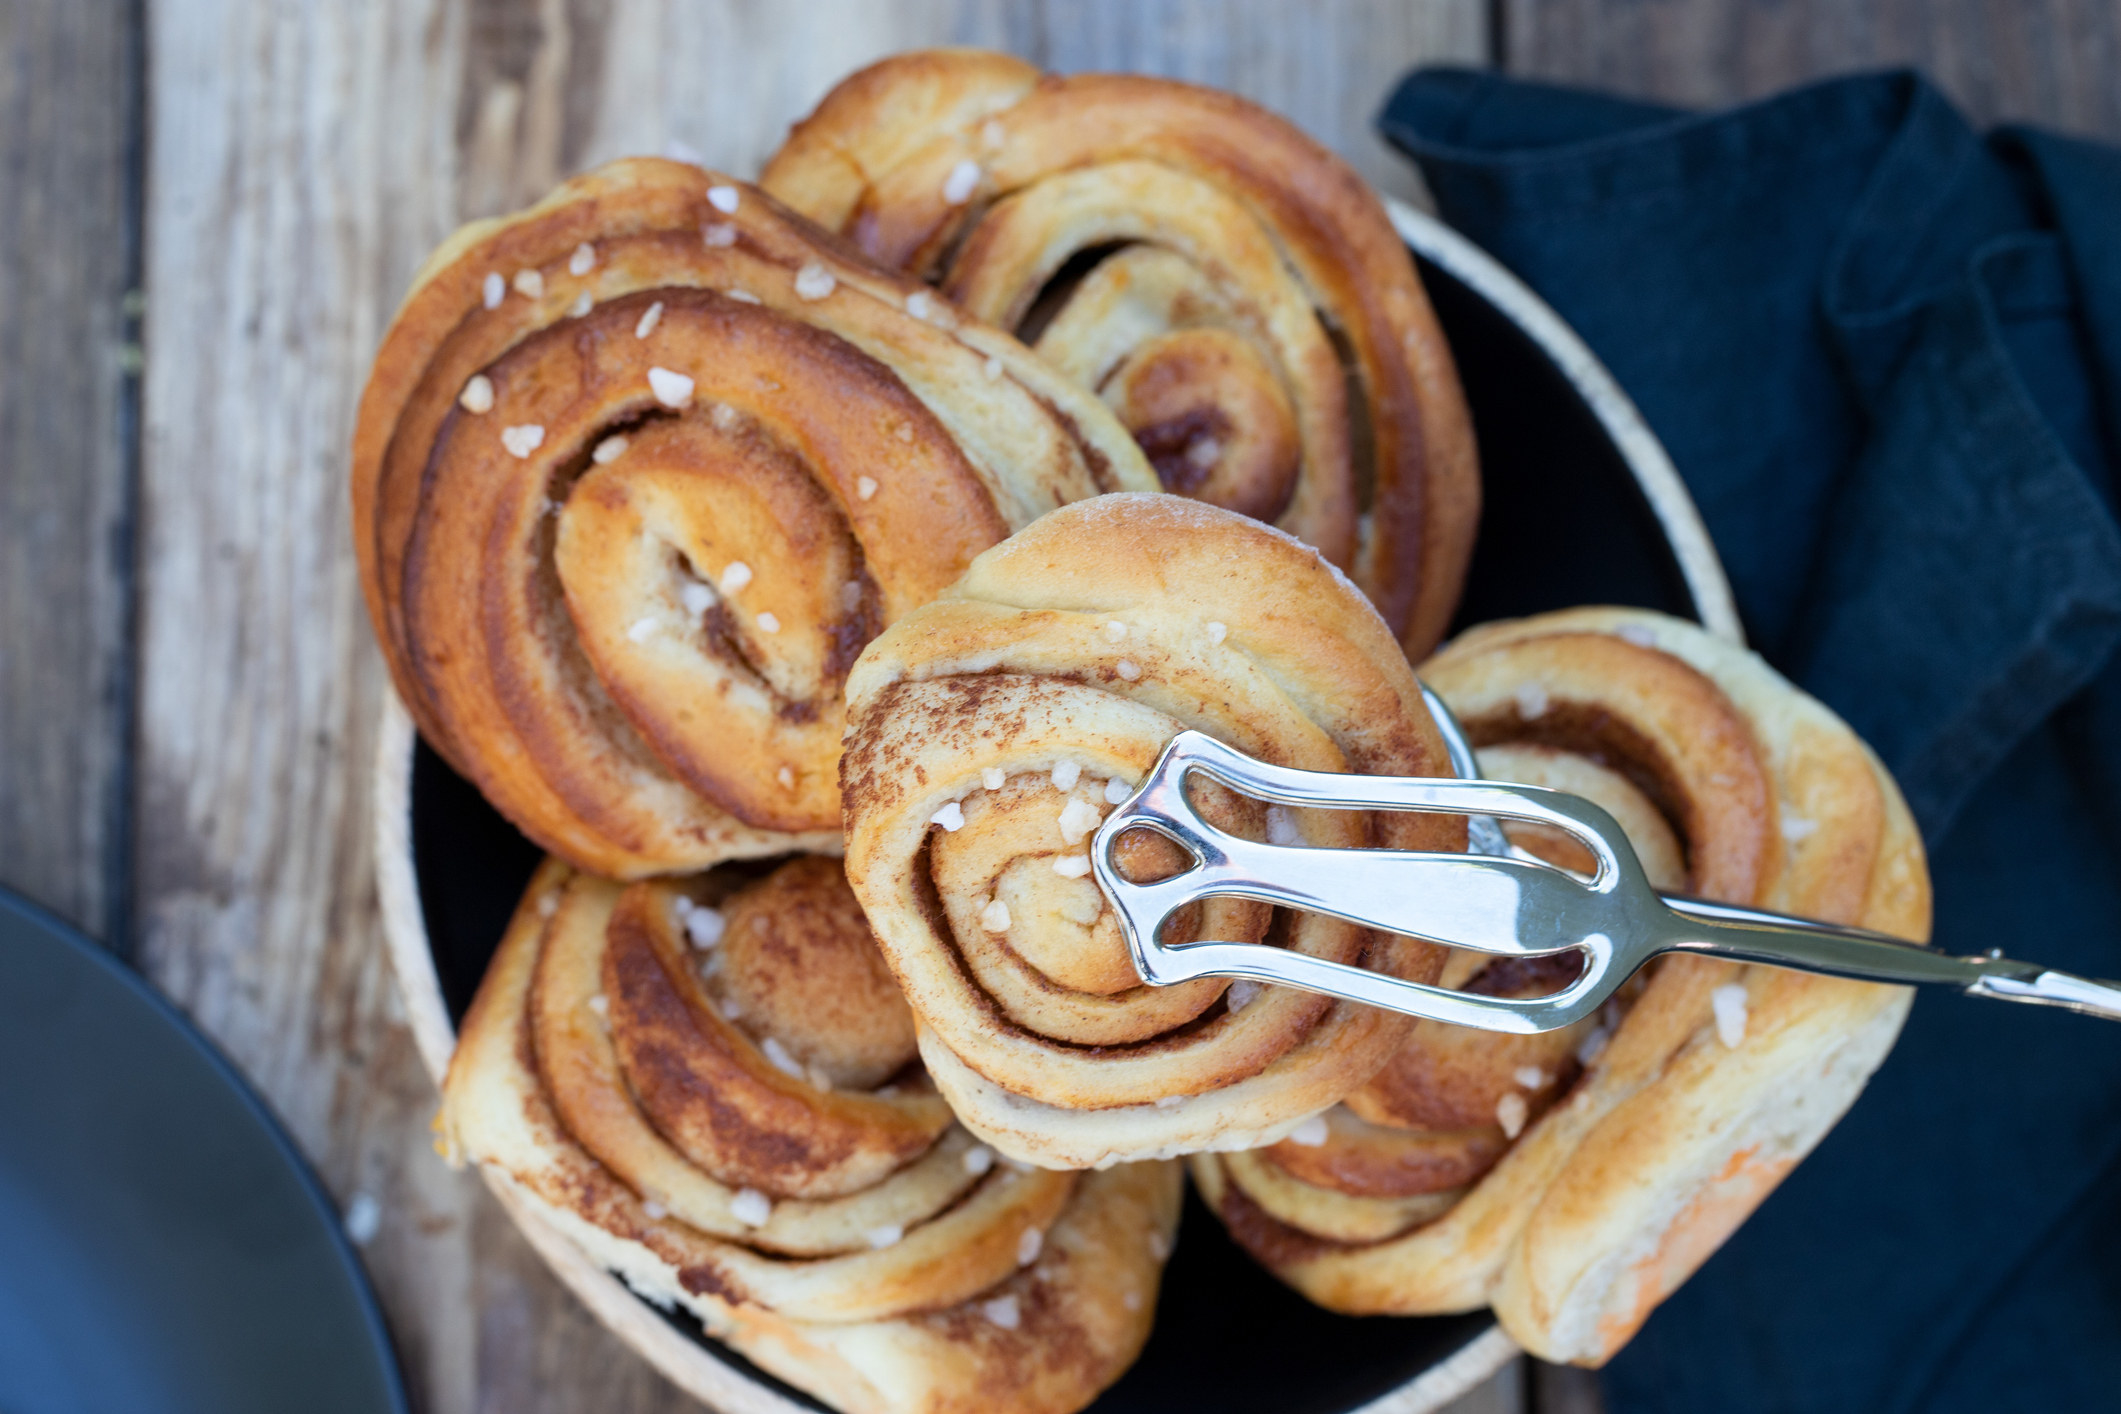 bowl full of buns with swirls of cinnamon running through the dough